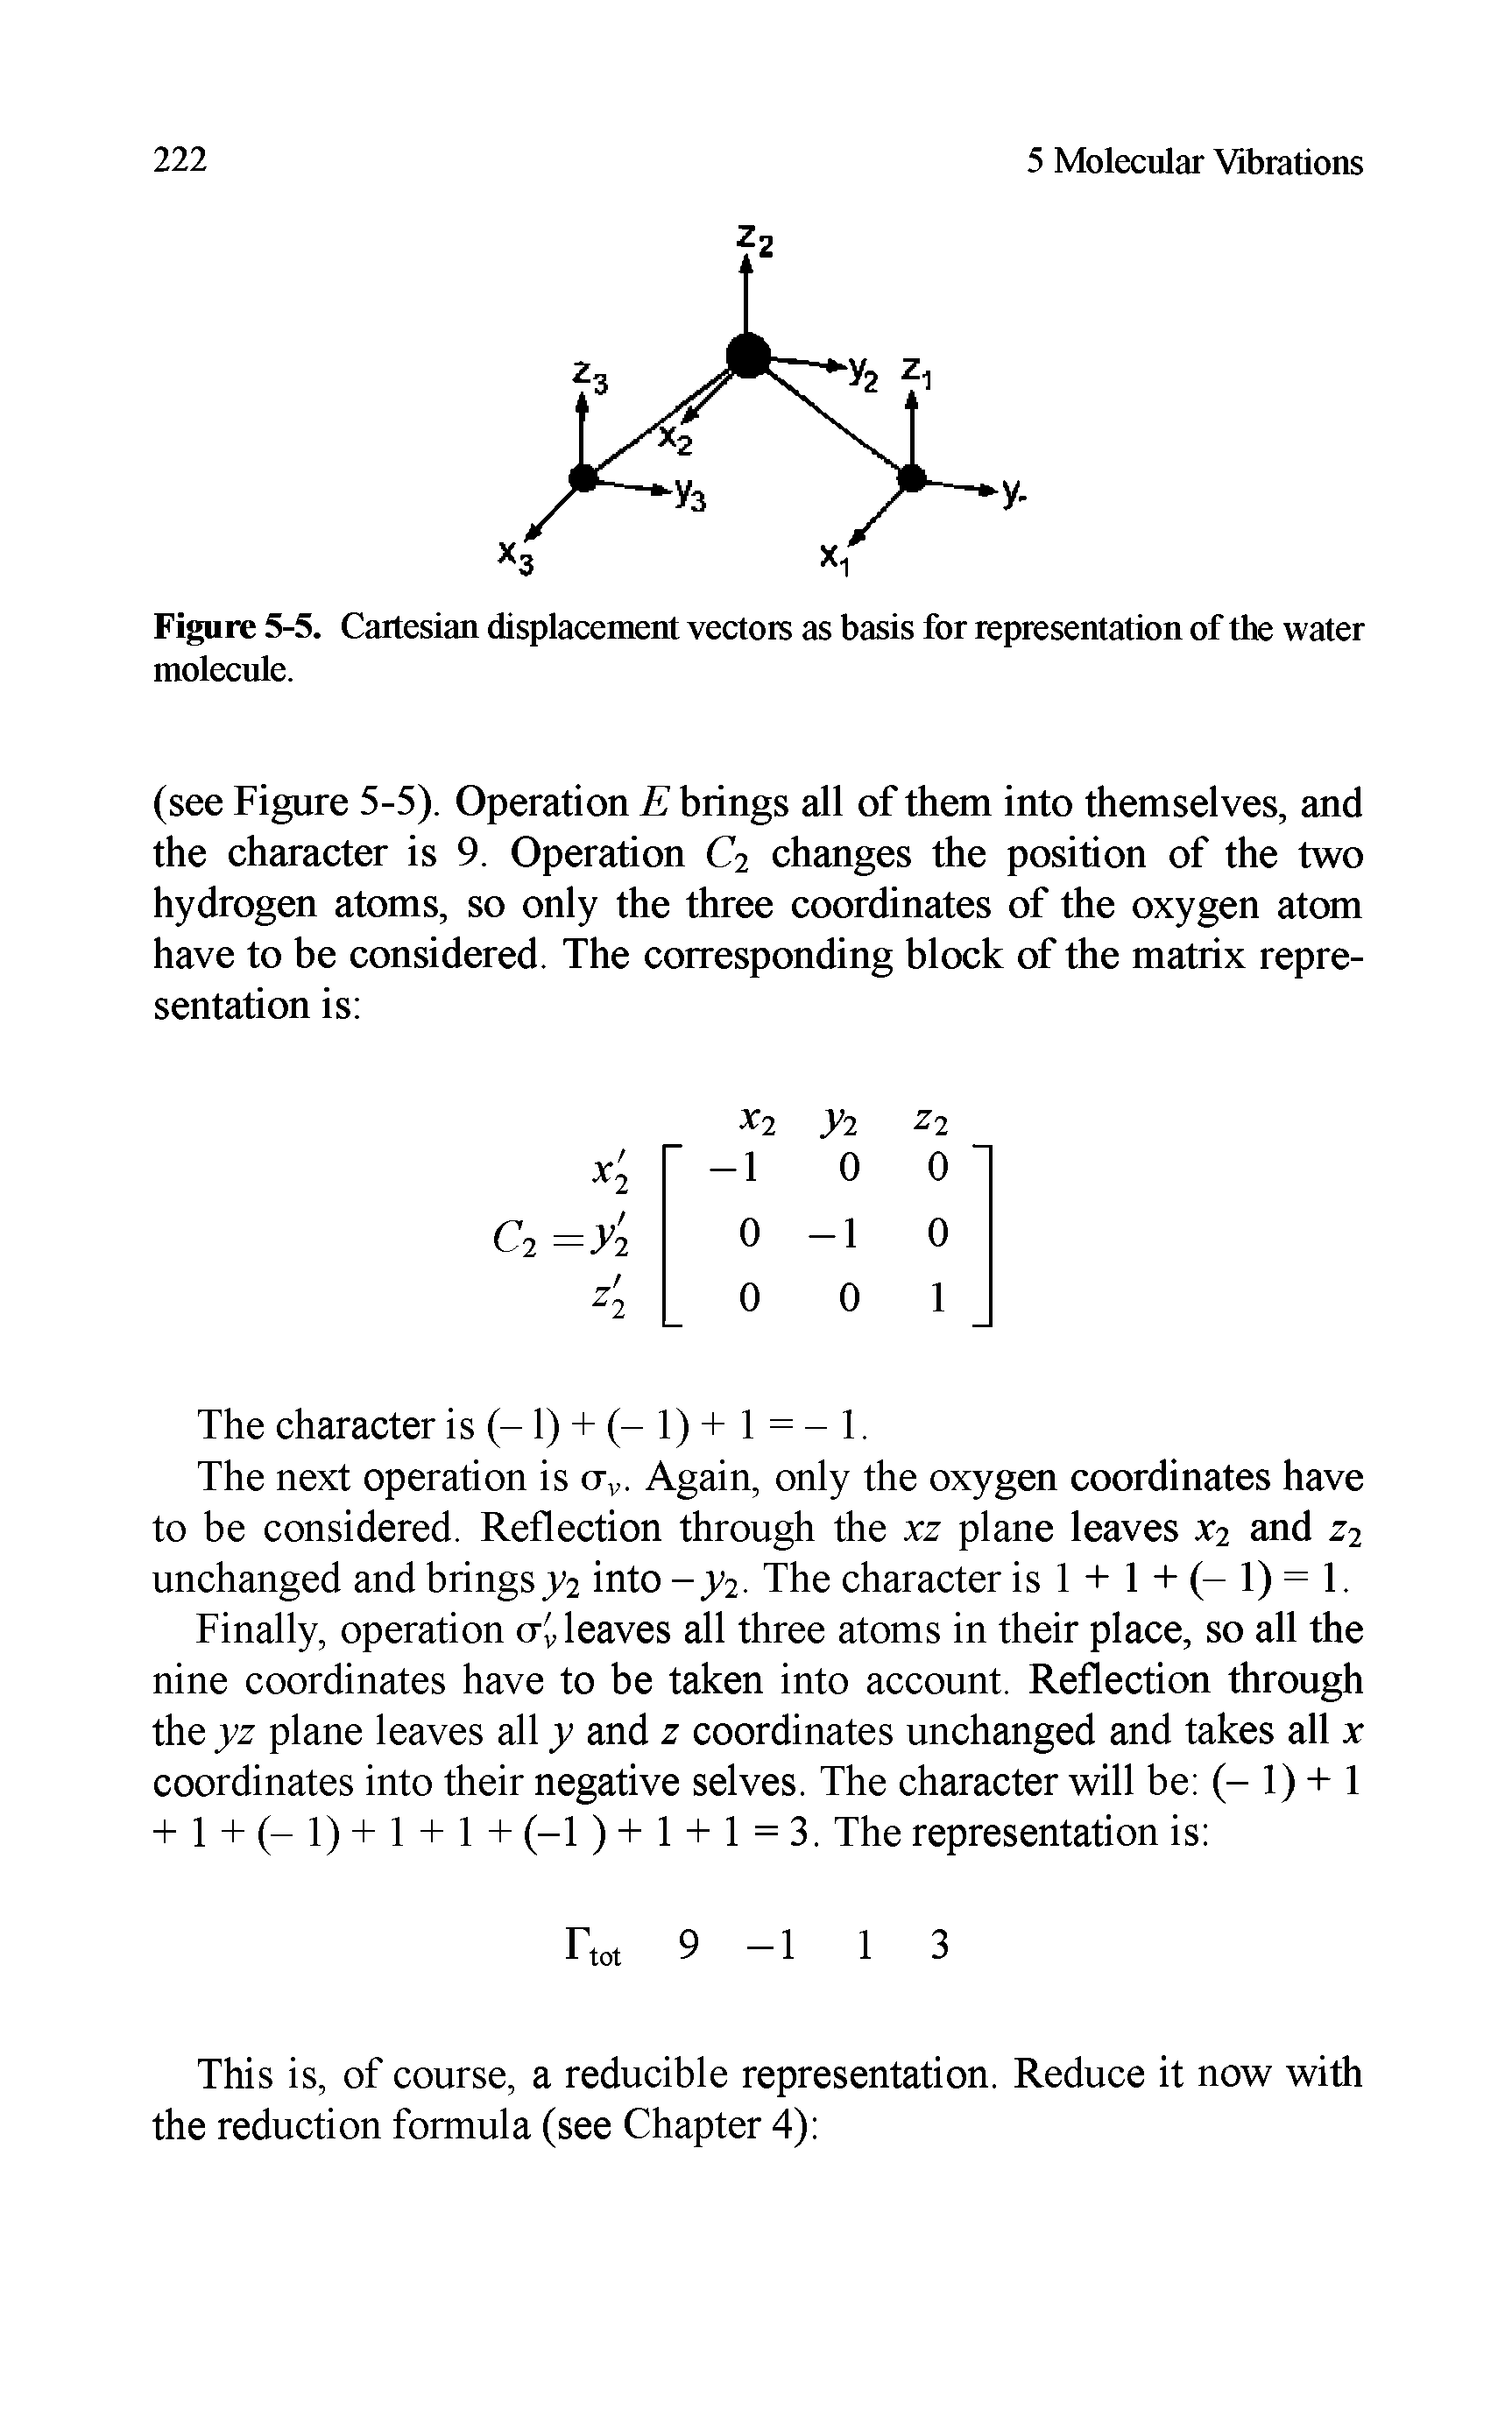 Figure 5-5. Cartesian displacement vectors as basis for representation of the water molecule.